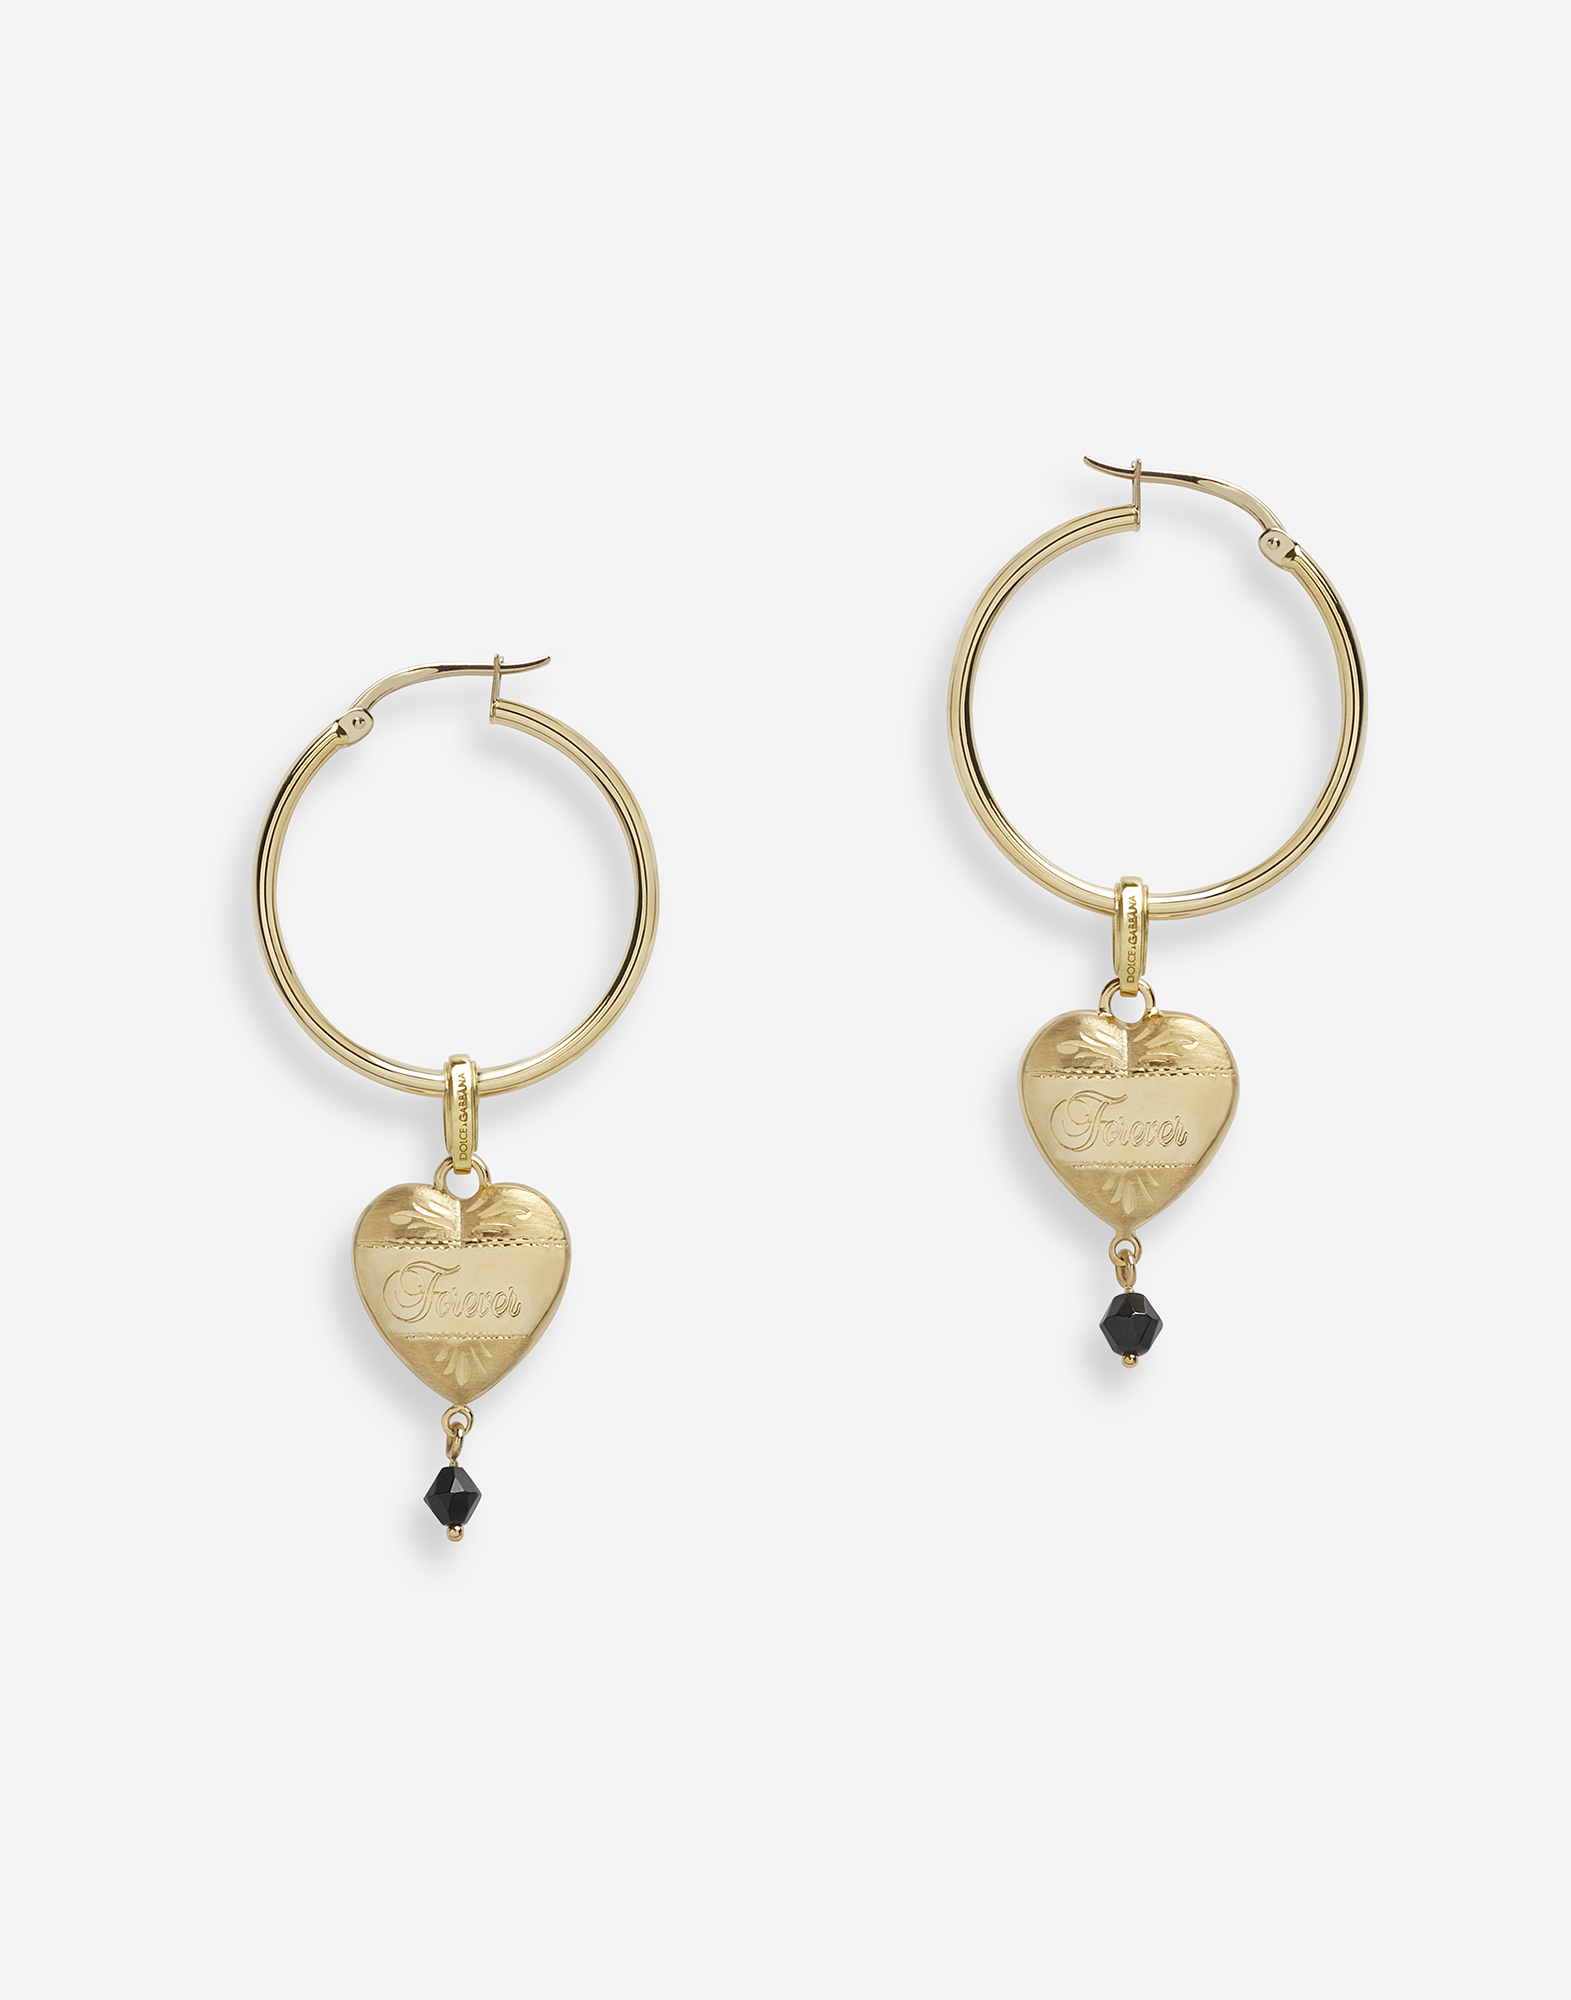 Hoop earrings with heart pendant